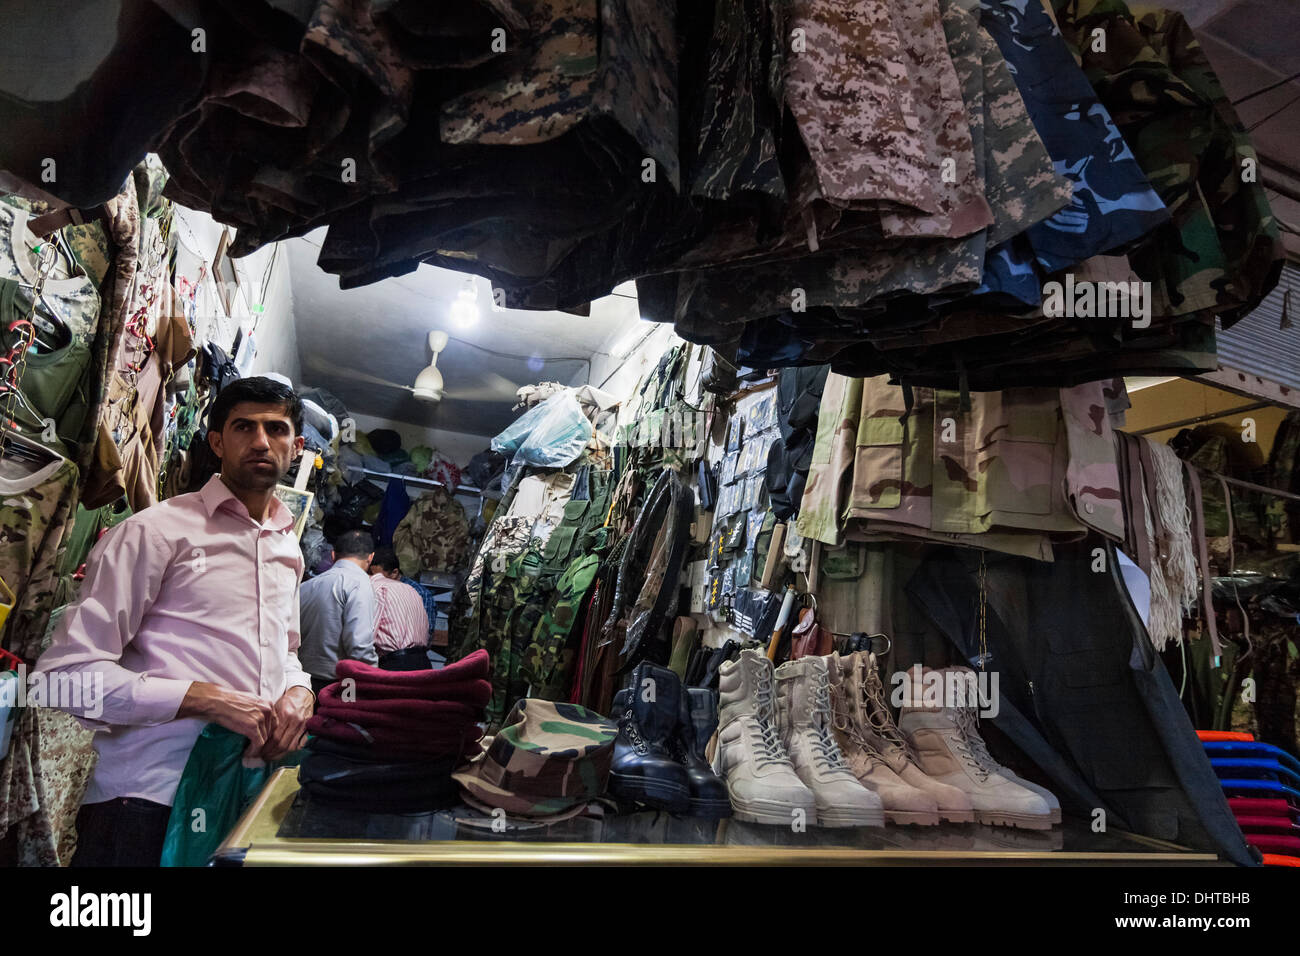 Vendor at bazaar shop selling military gear at Dohuk bazaar, Kurdish Iraq Stock Photo